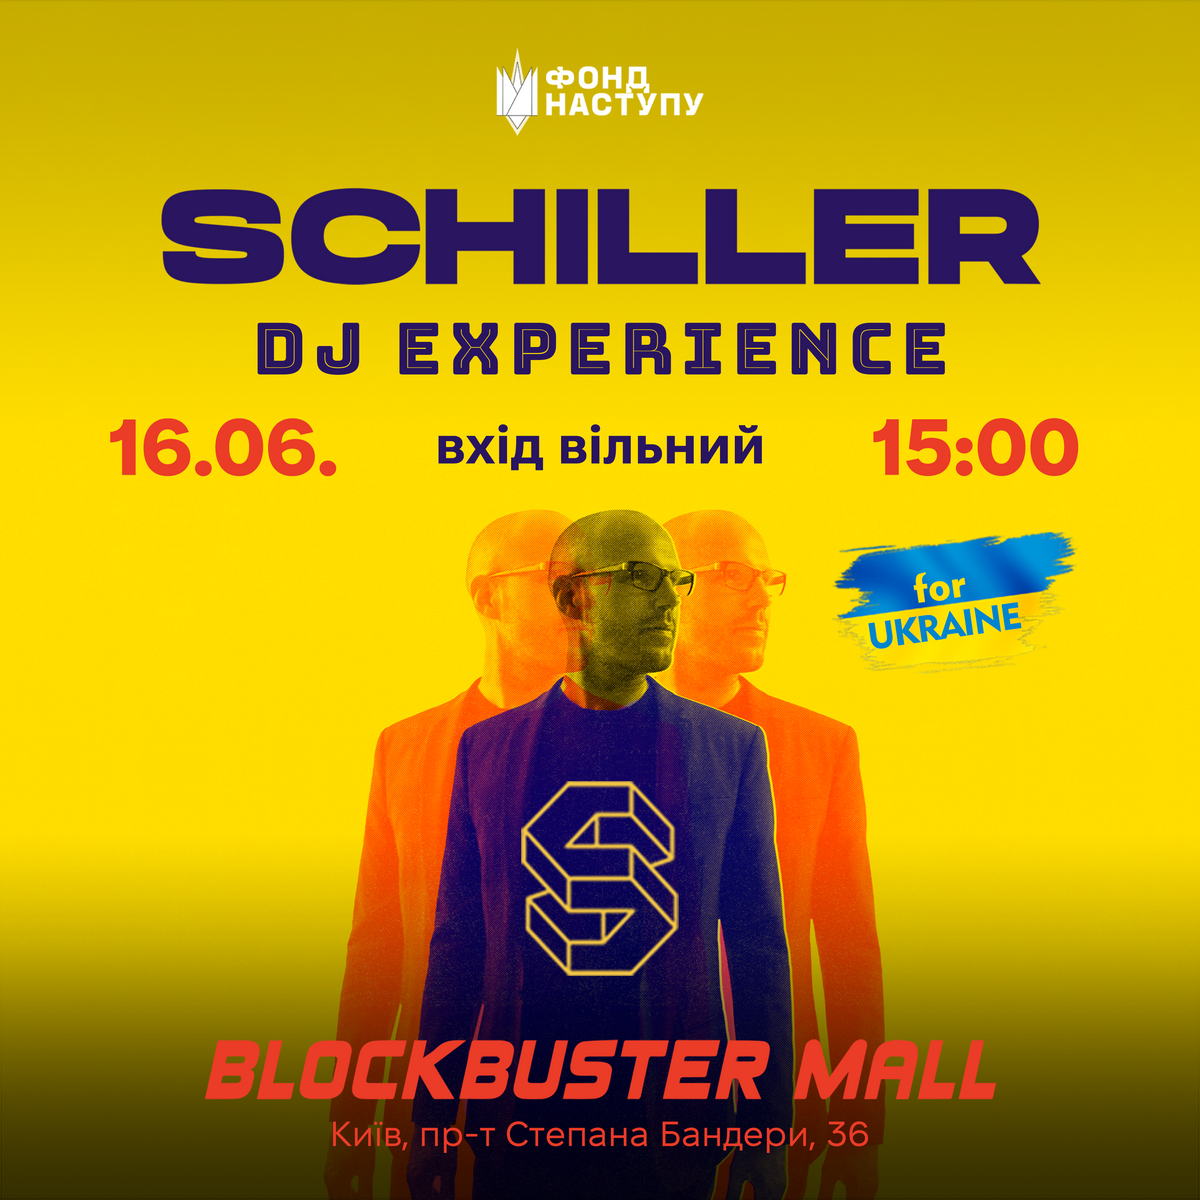 SCHILLER will visit Blockbuster Mall on June 16!